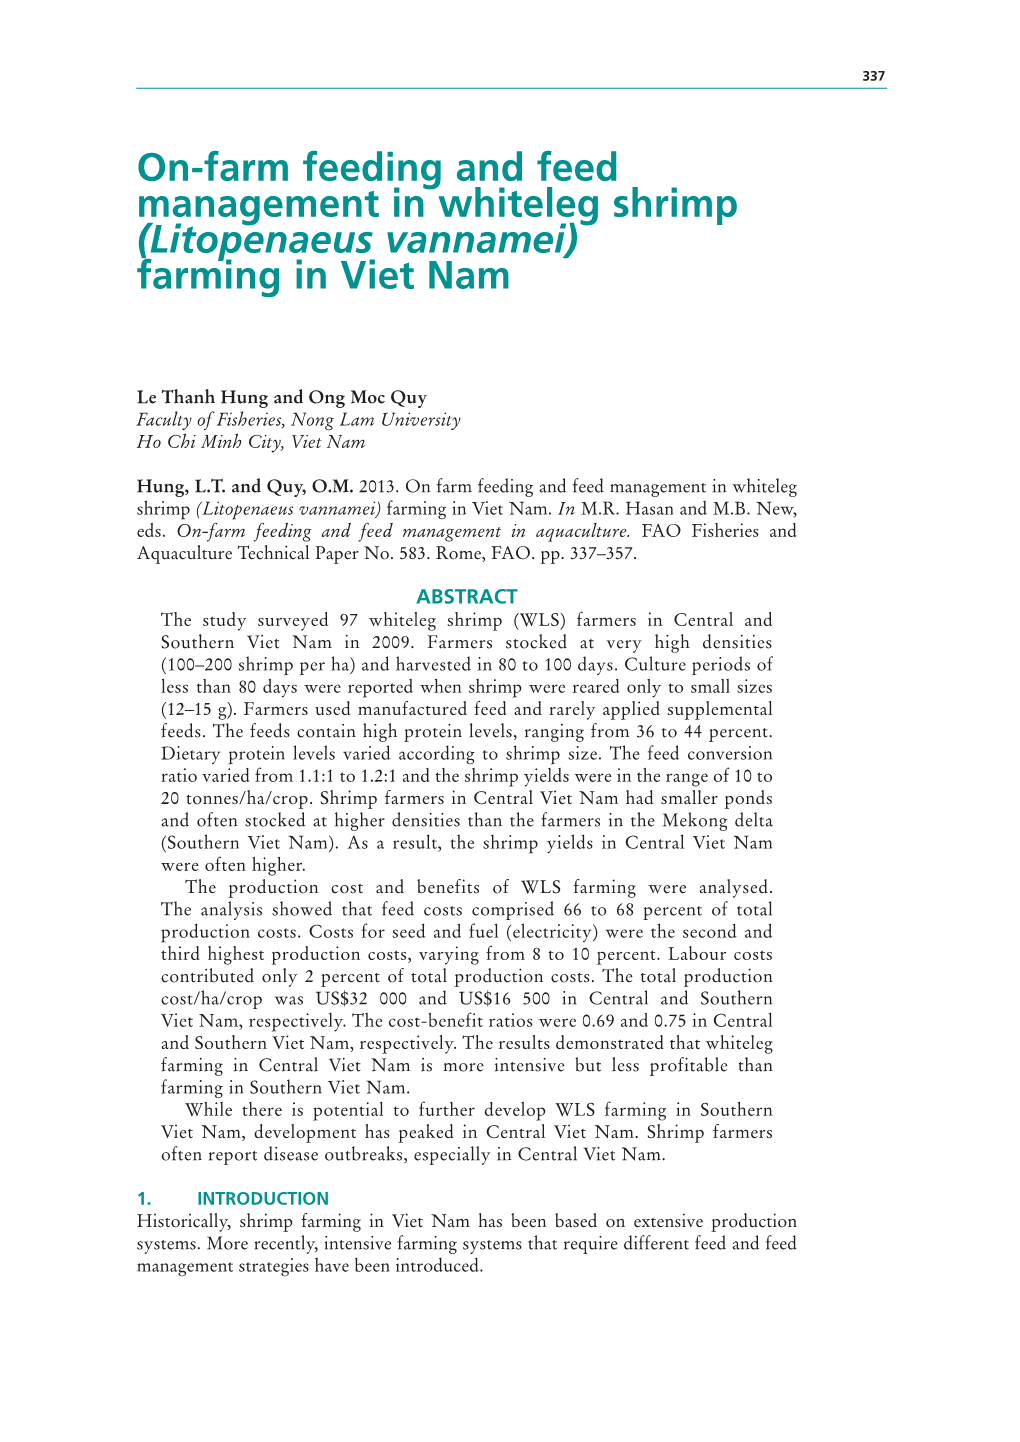 On-Farm Feeding and Feed Management in Whiteleg Shrimp (Litopenaeus Vannamei) Farming in Viet Nam